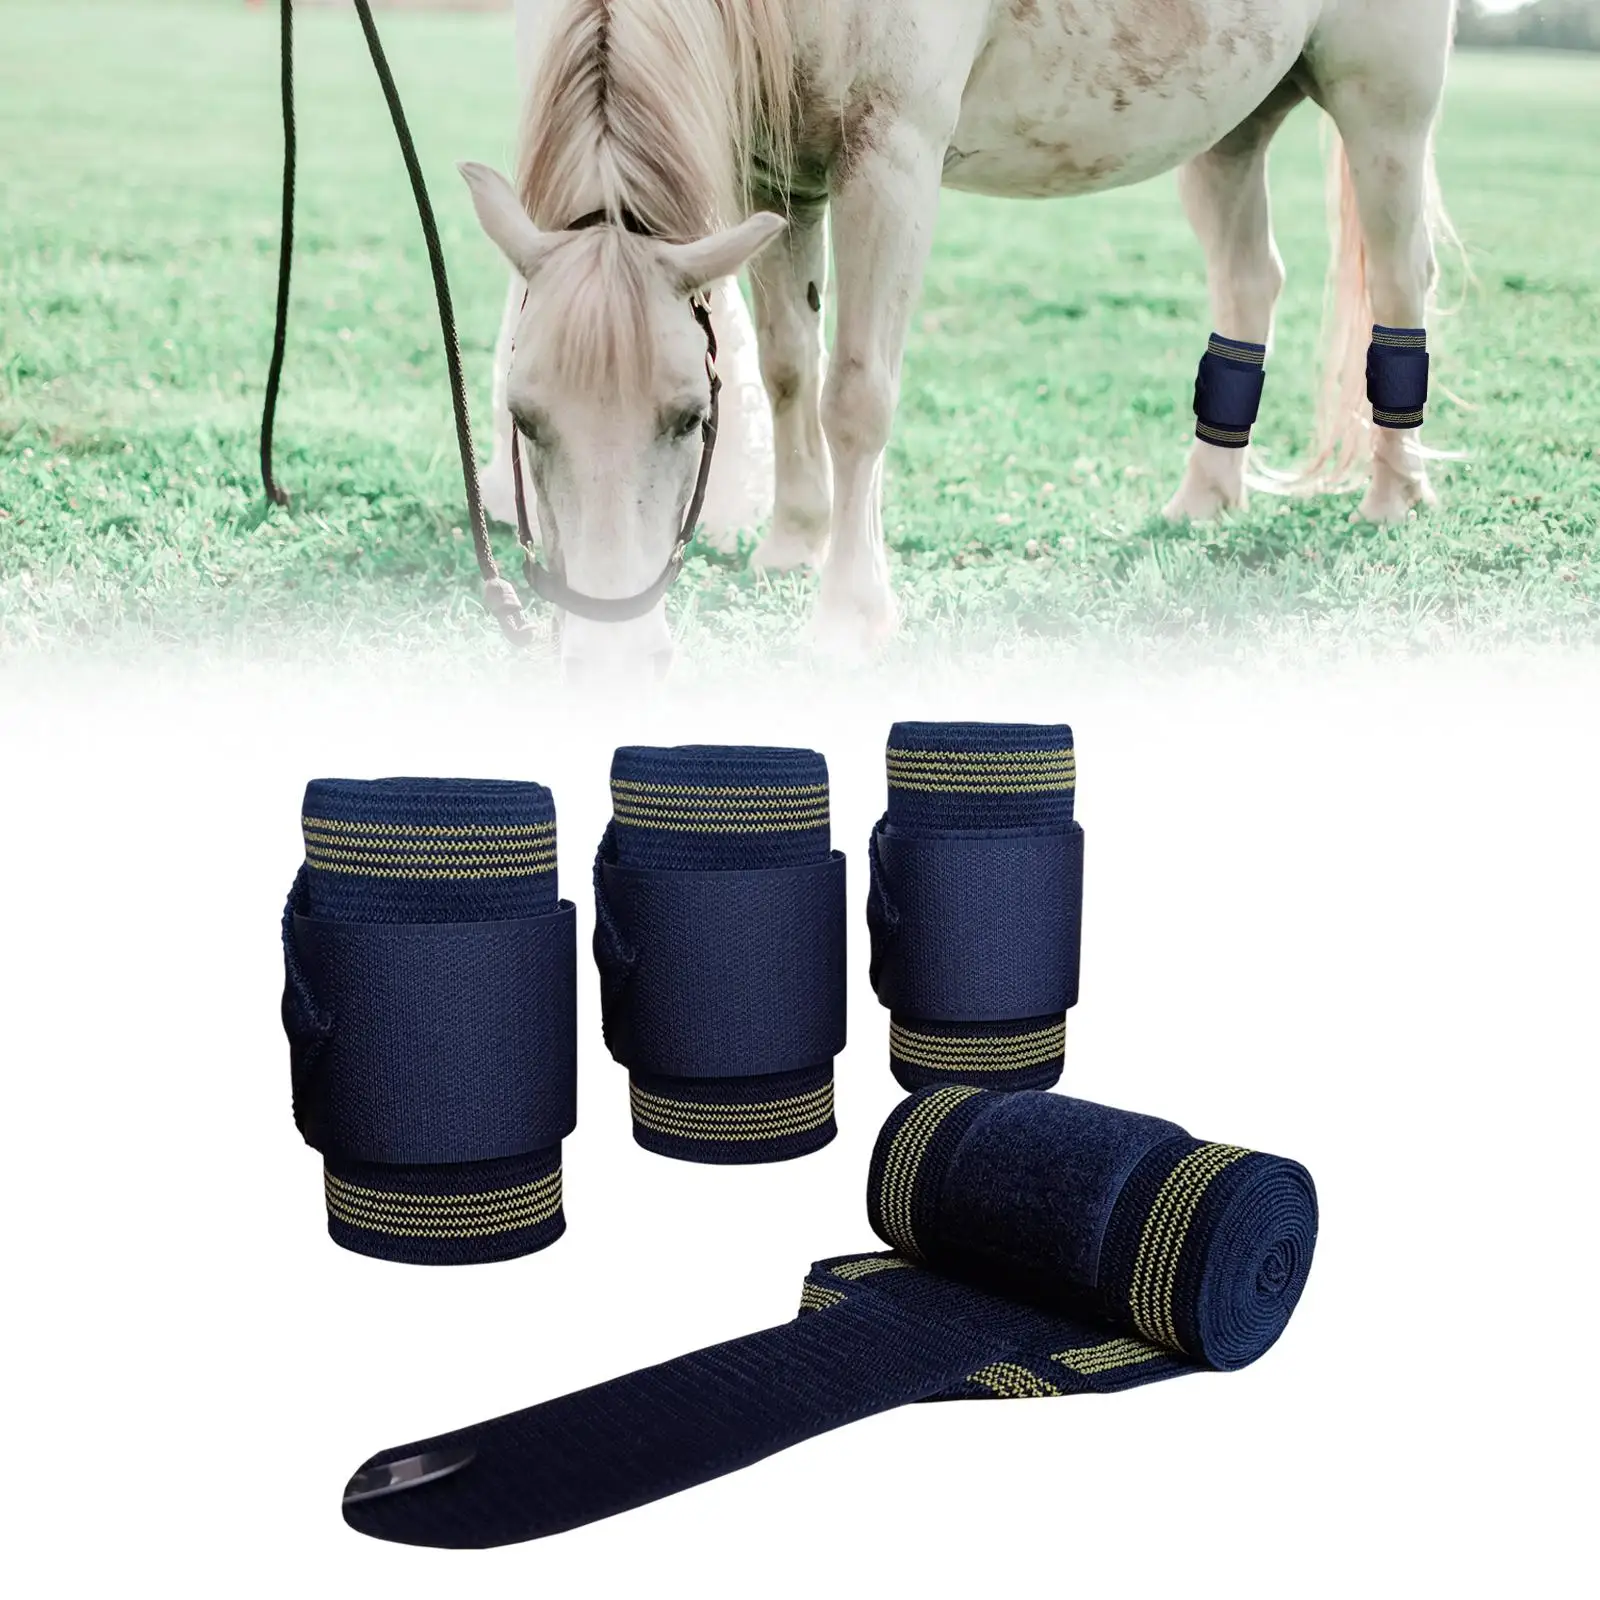 4 Pieces Horse Leg Wraps Riding Race Horse Boot Wrap Equestrian Accessories Elastic Leg Guards for Livestock Training Exercising